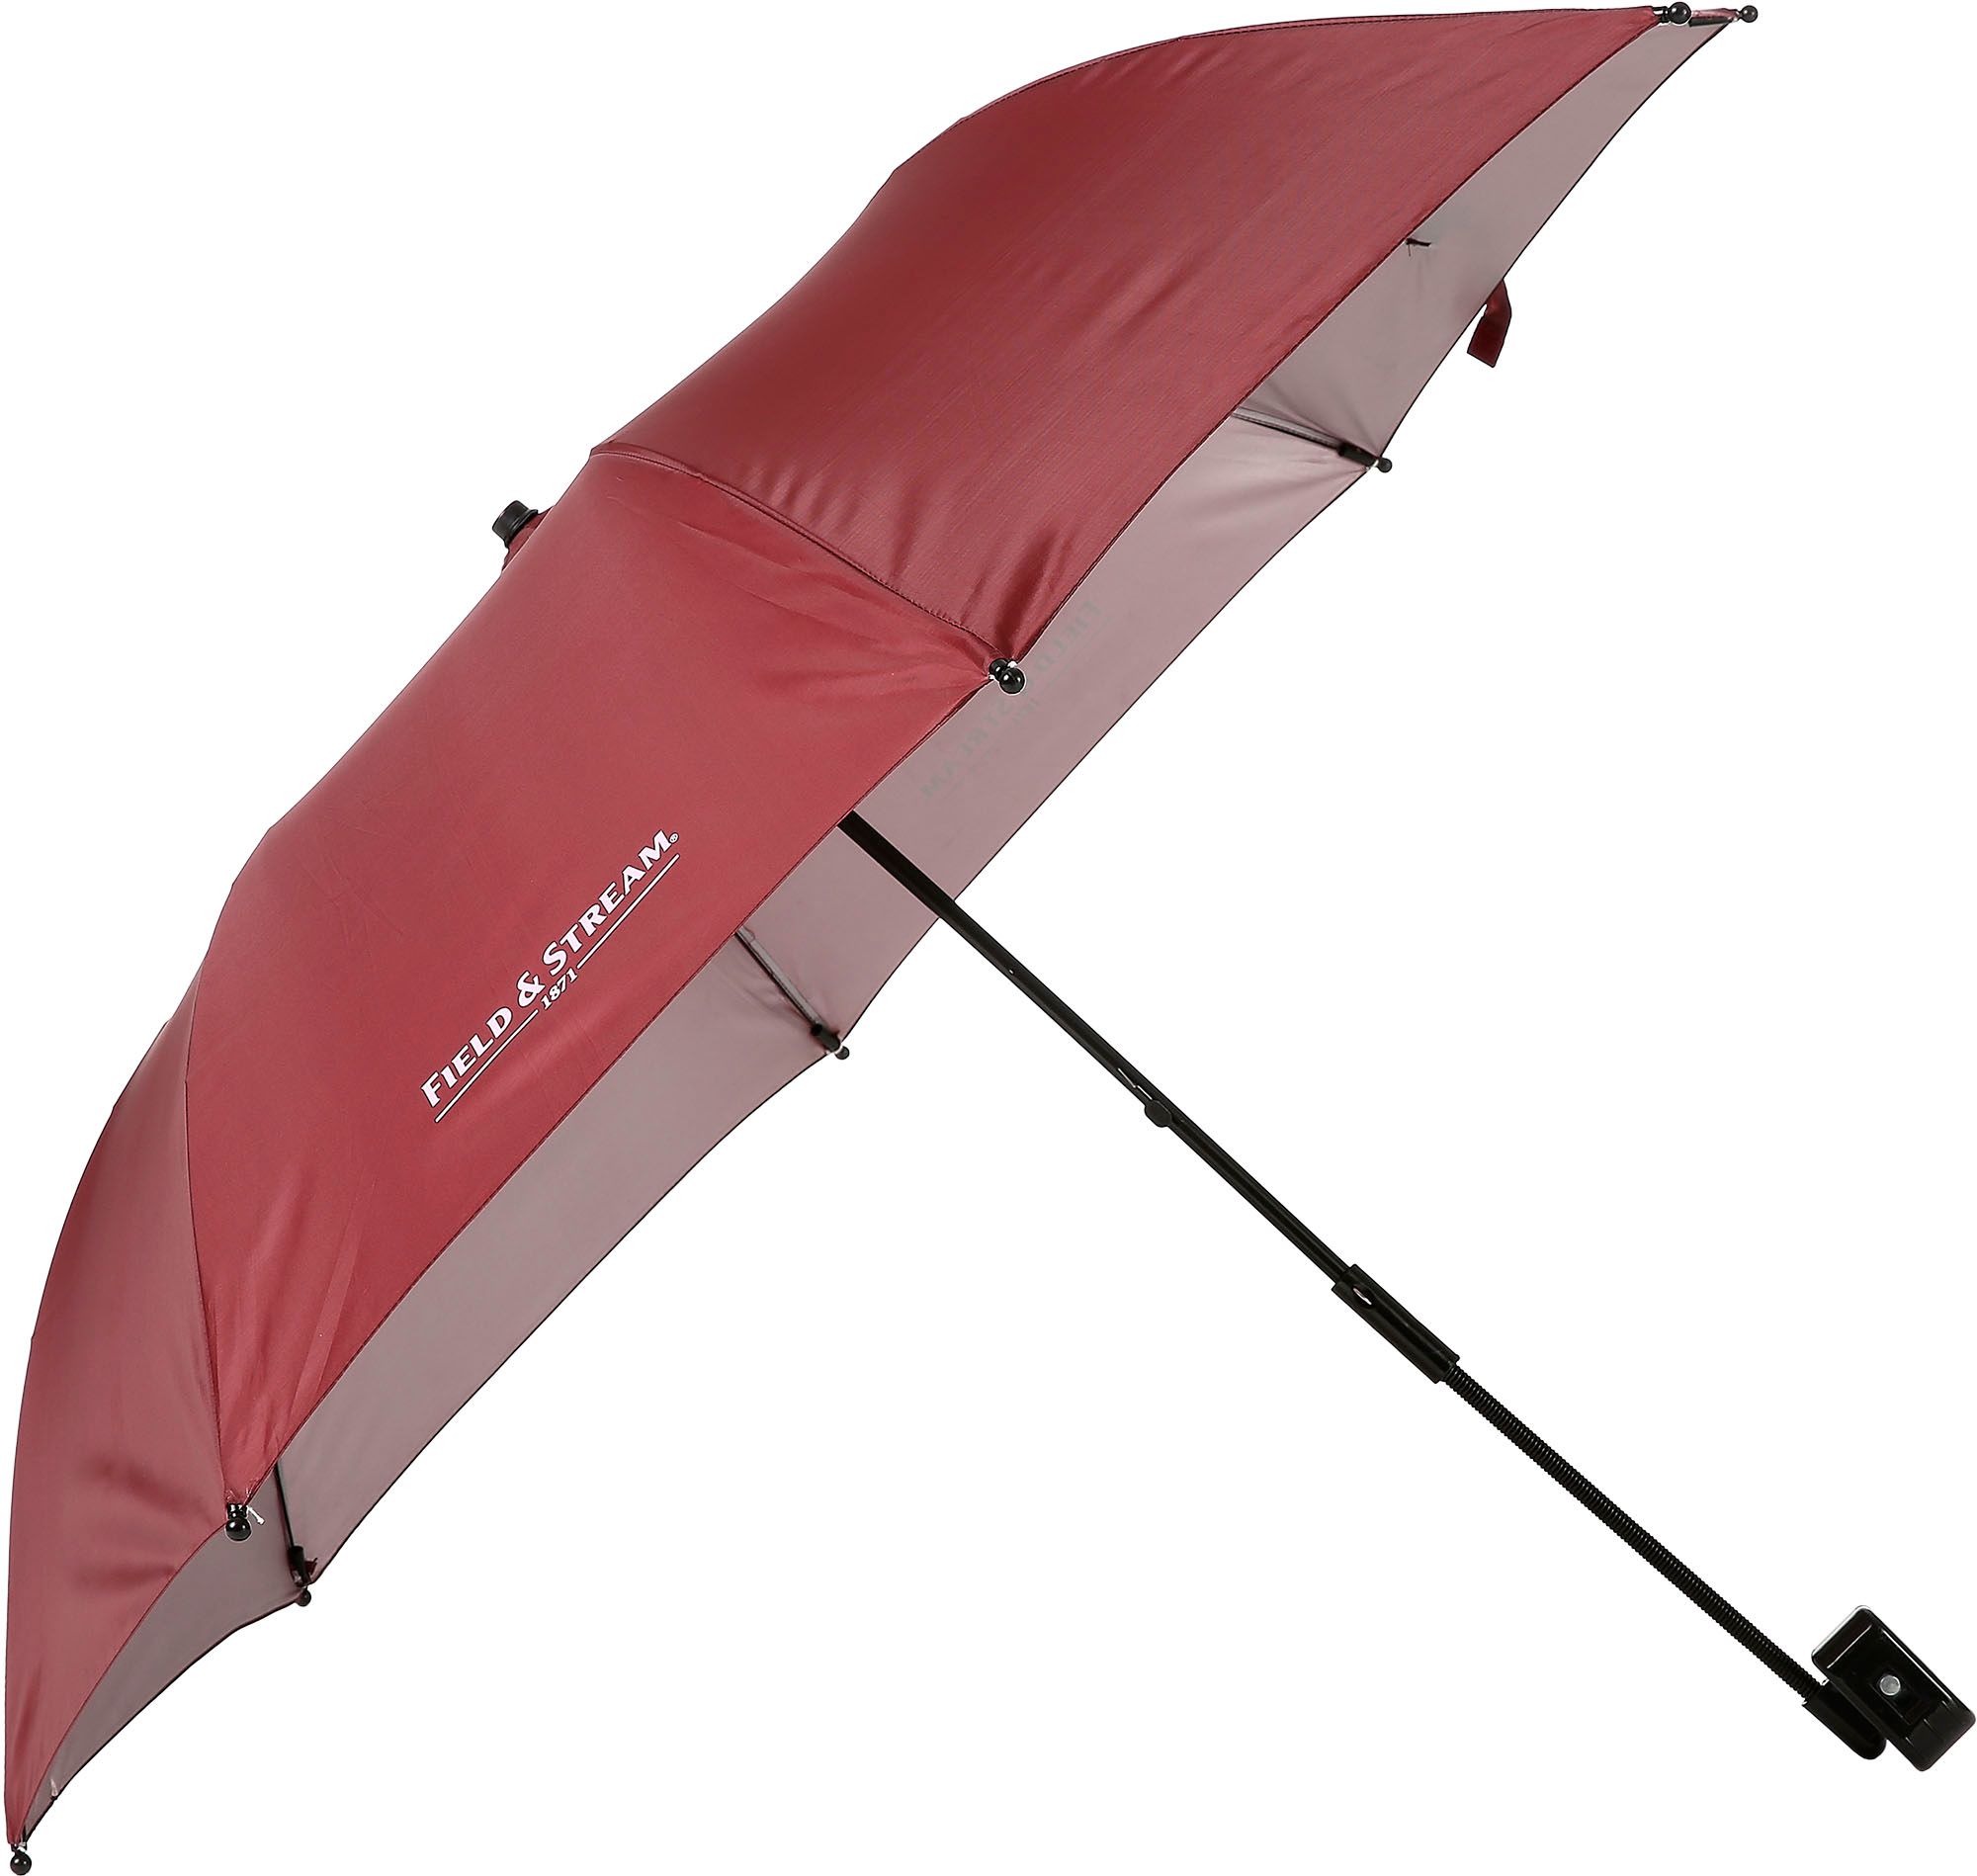 field and stream chair umbrella